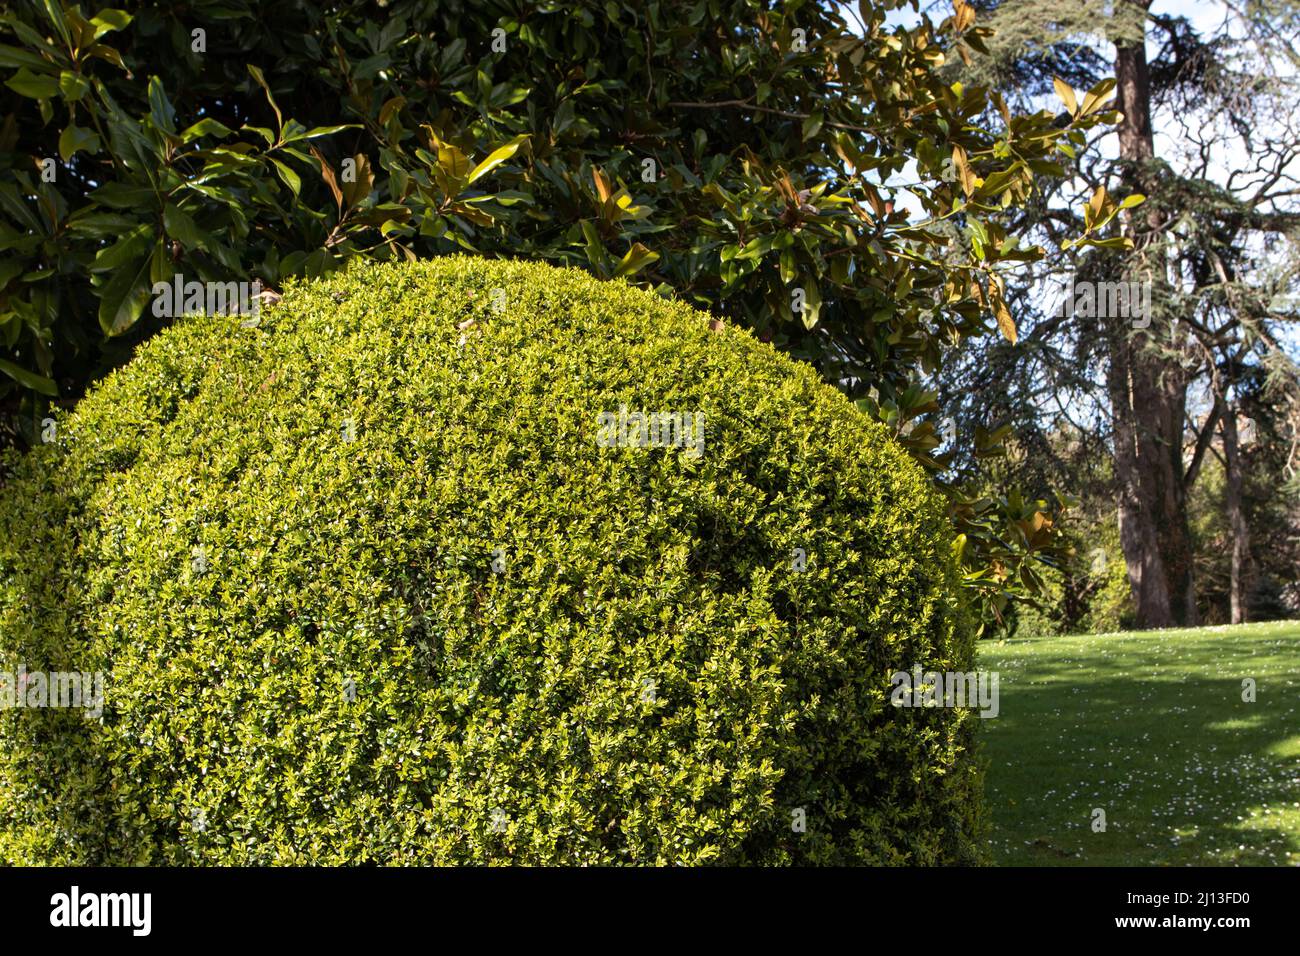 Common box, European box, or boxwood evergreen pruned shrub in the sunny garden. Buxus sempervirens topiary. Stock Photo